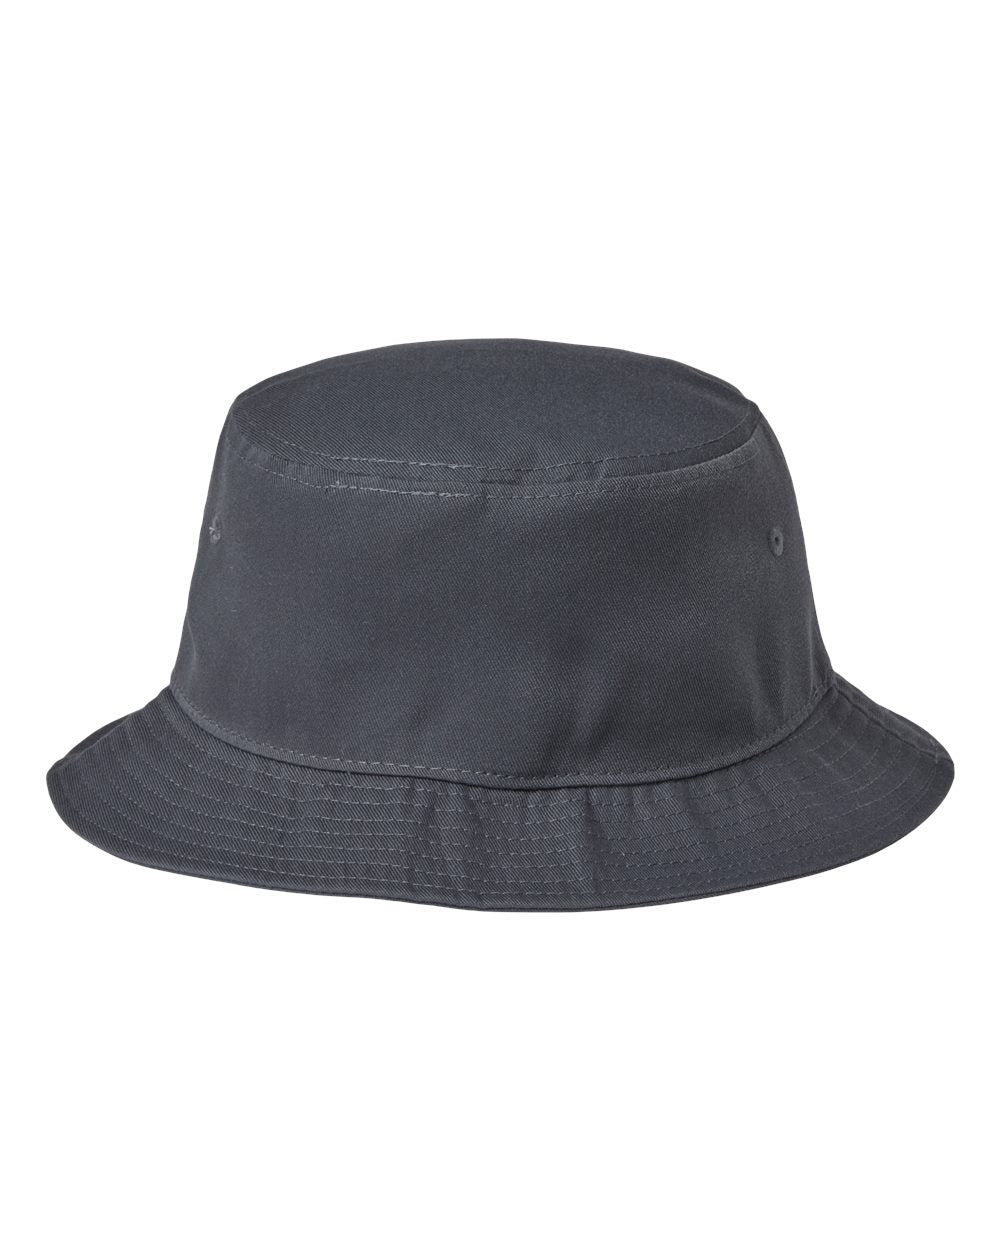 Customizable Atlantis Headwear Geob Bucket Hat in gray